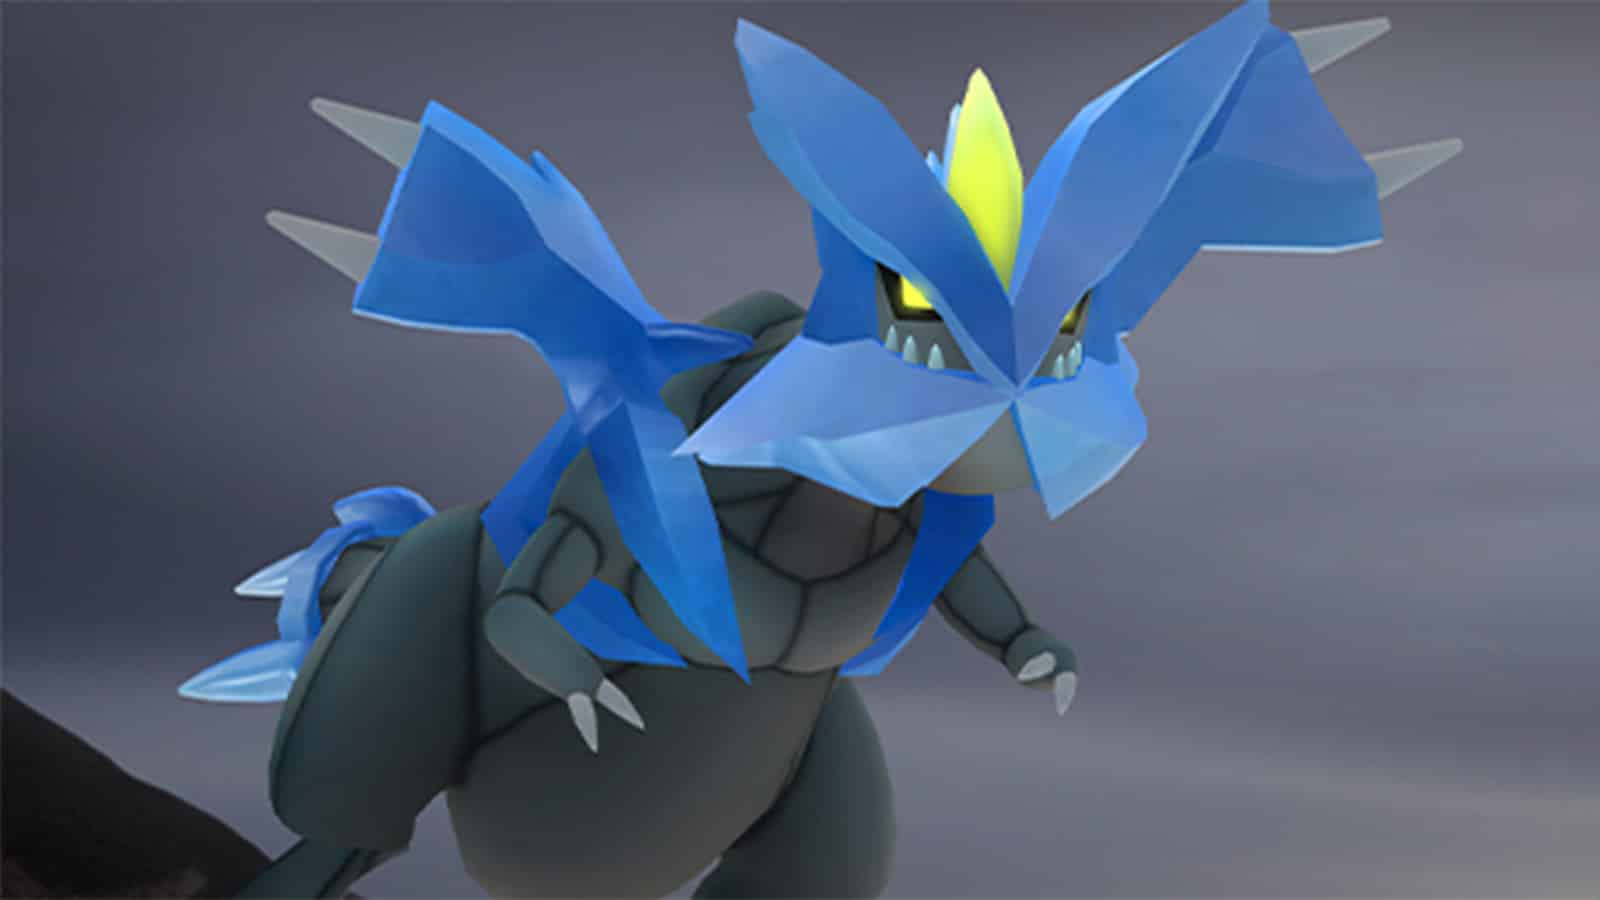 Kyurem appearing in a 5-Star Raid battle in Pokemon Go